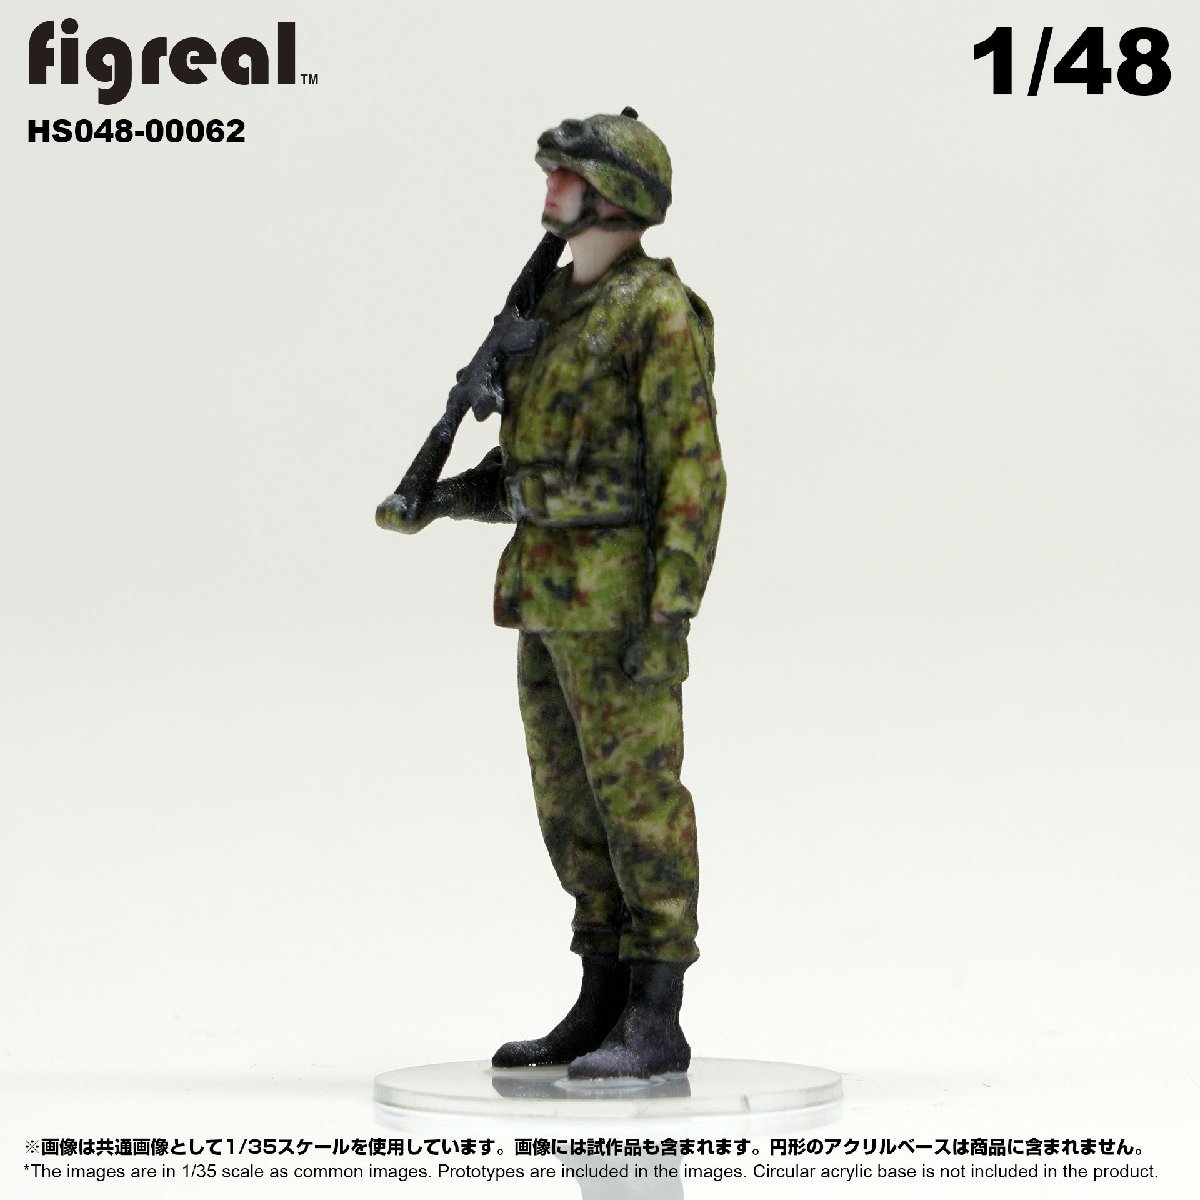 HS048-00062 figreal 陸上自衛隊 1/48 JGSDF 高精細フィギュア_画像3